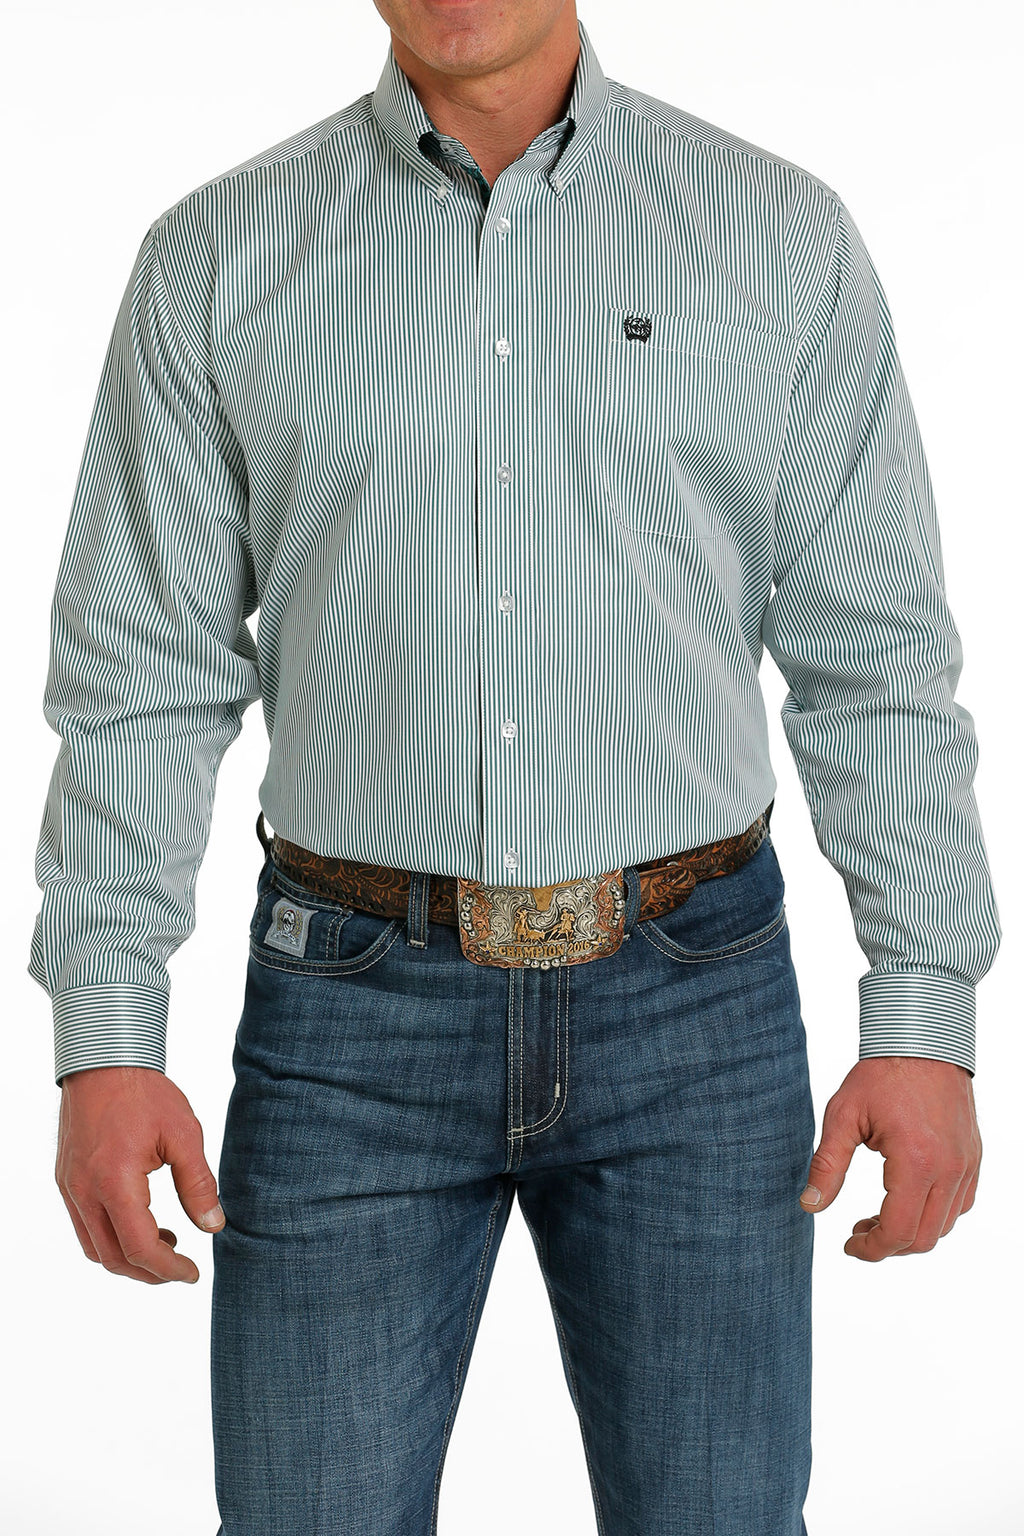 CINCH Men's Teal Stripe Button-Down Western Shirt